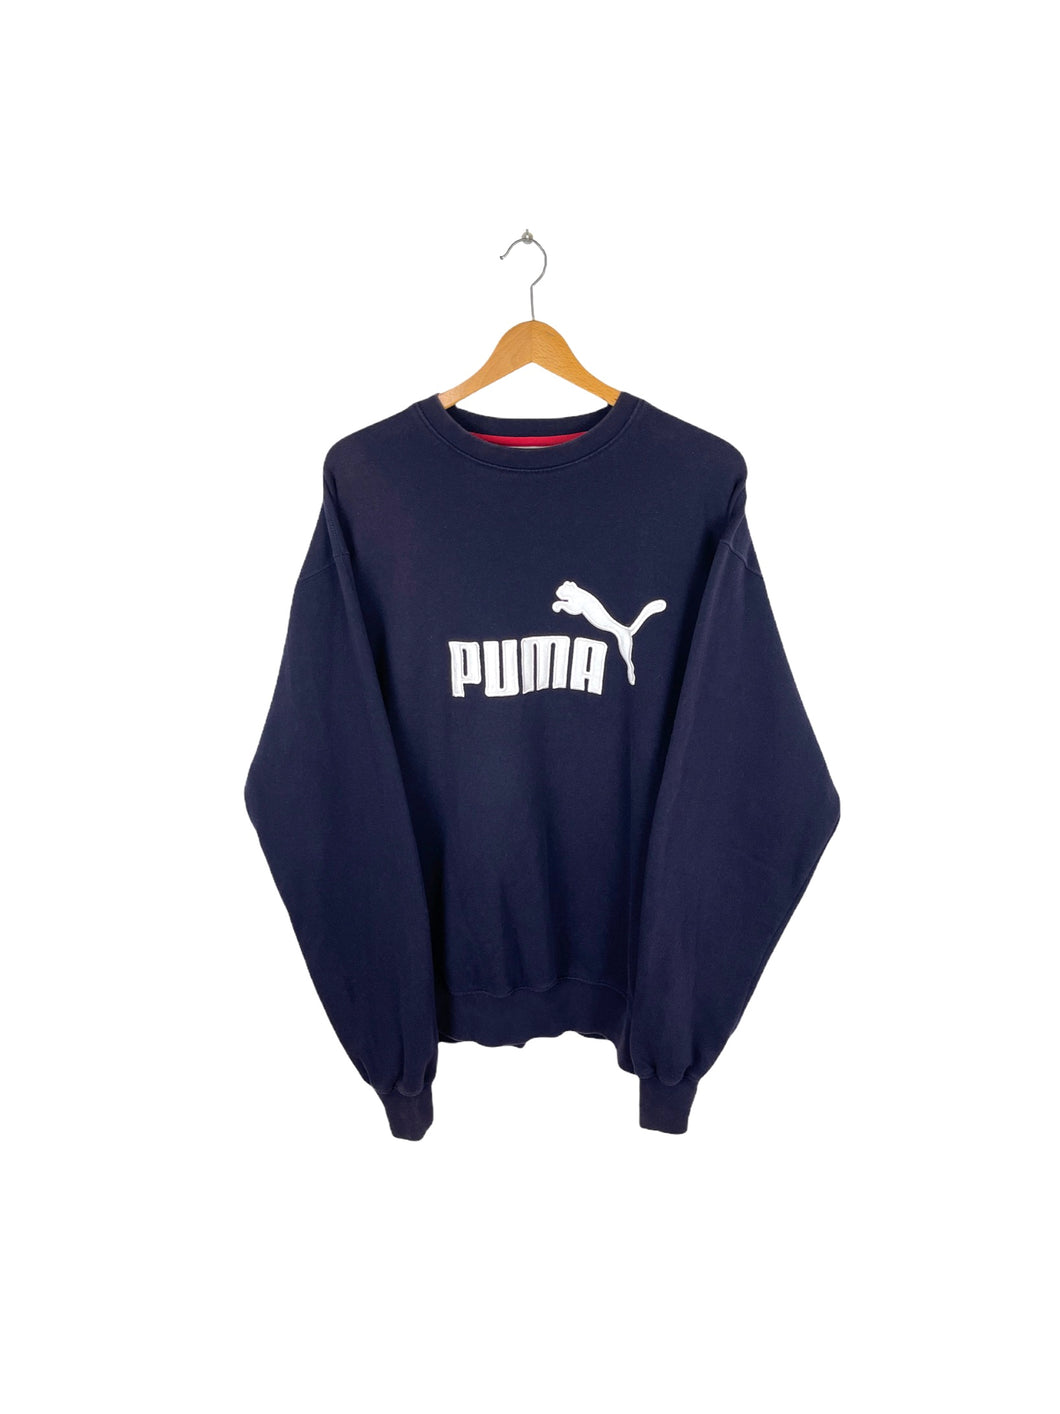 Puma Sweatshirt - XLarge